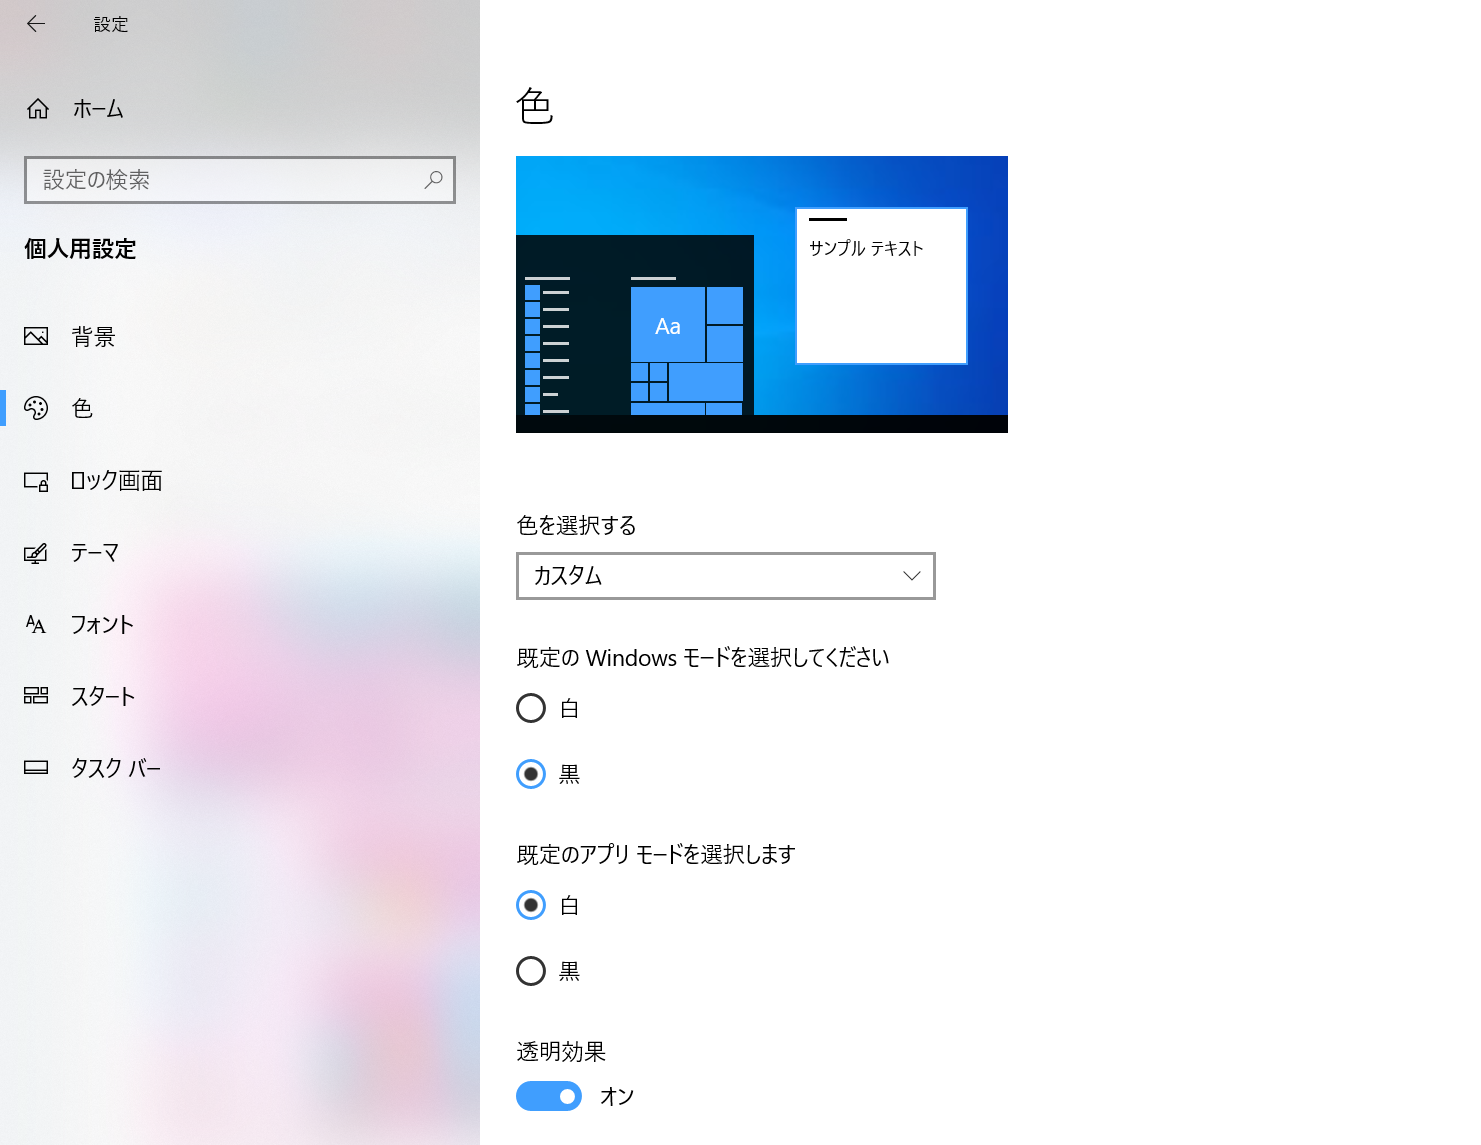 Windows10 May 19 Update 19h1 の新機能をまとめてみた Wpteq